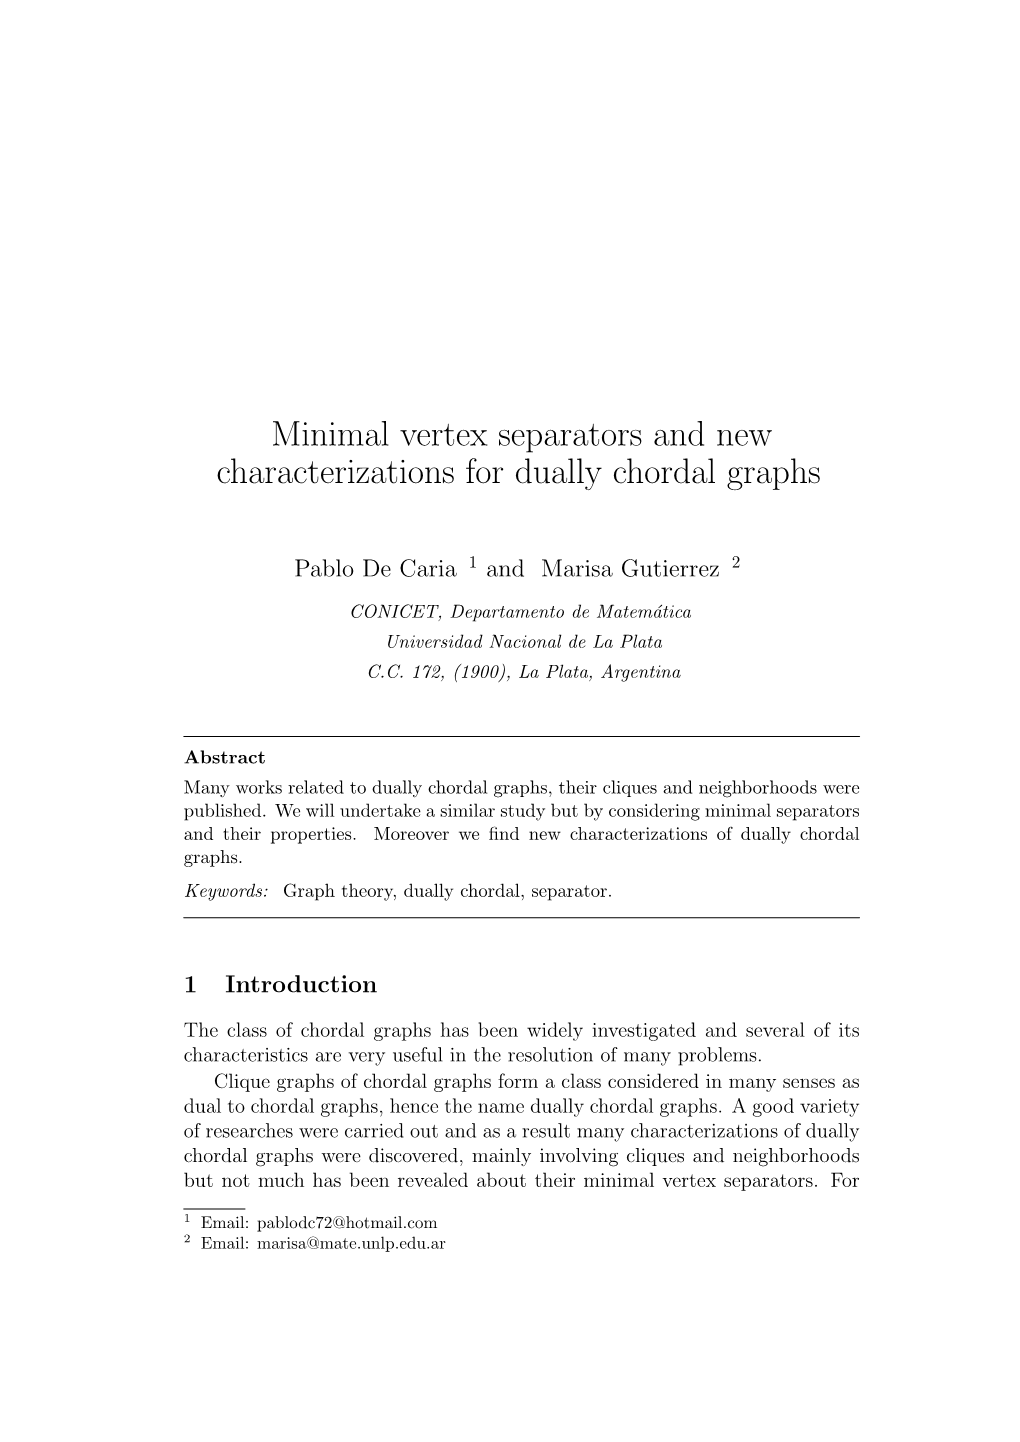 Minimal Vertex Separators and New Characterizations for Dually Chordal Graphs